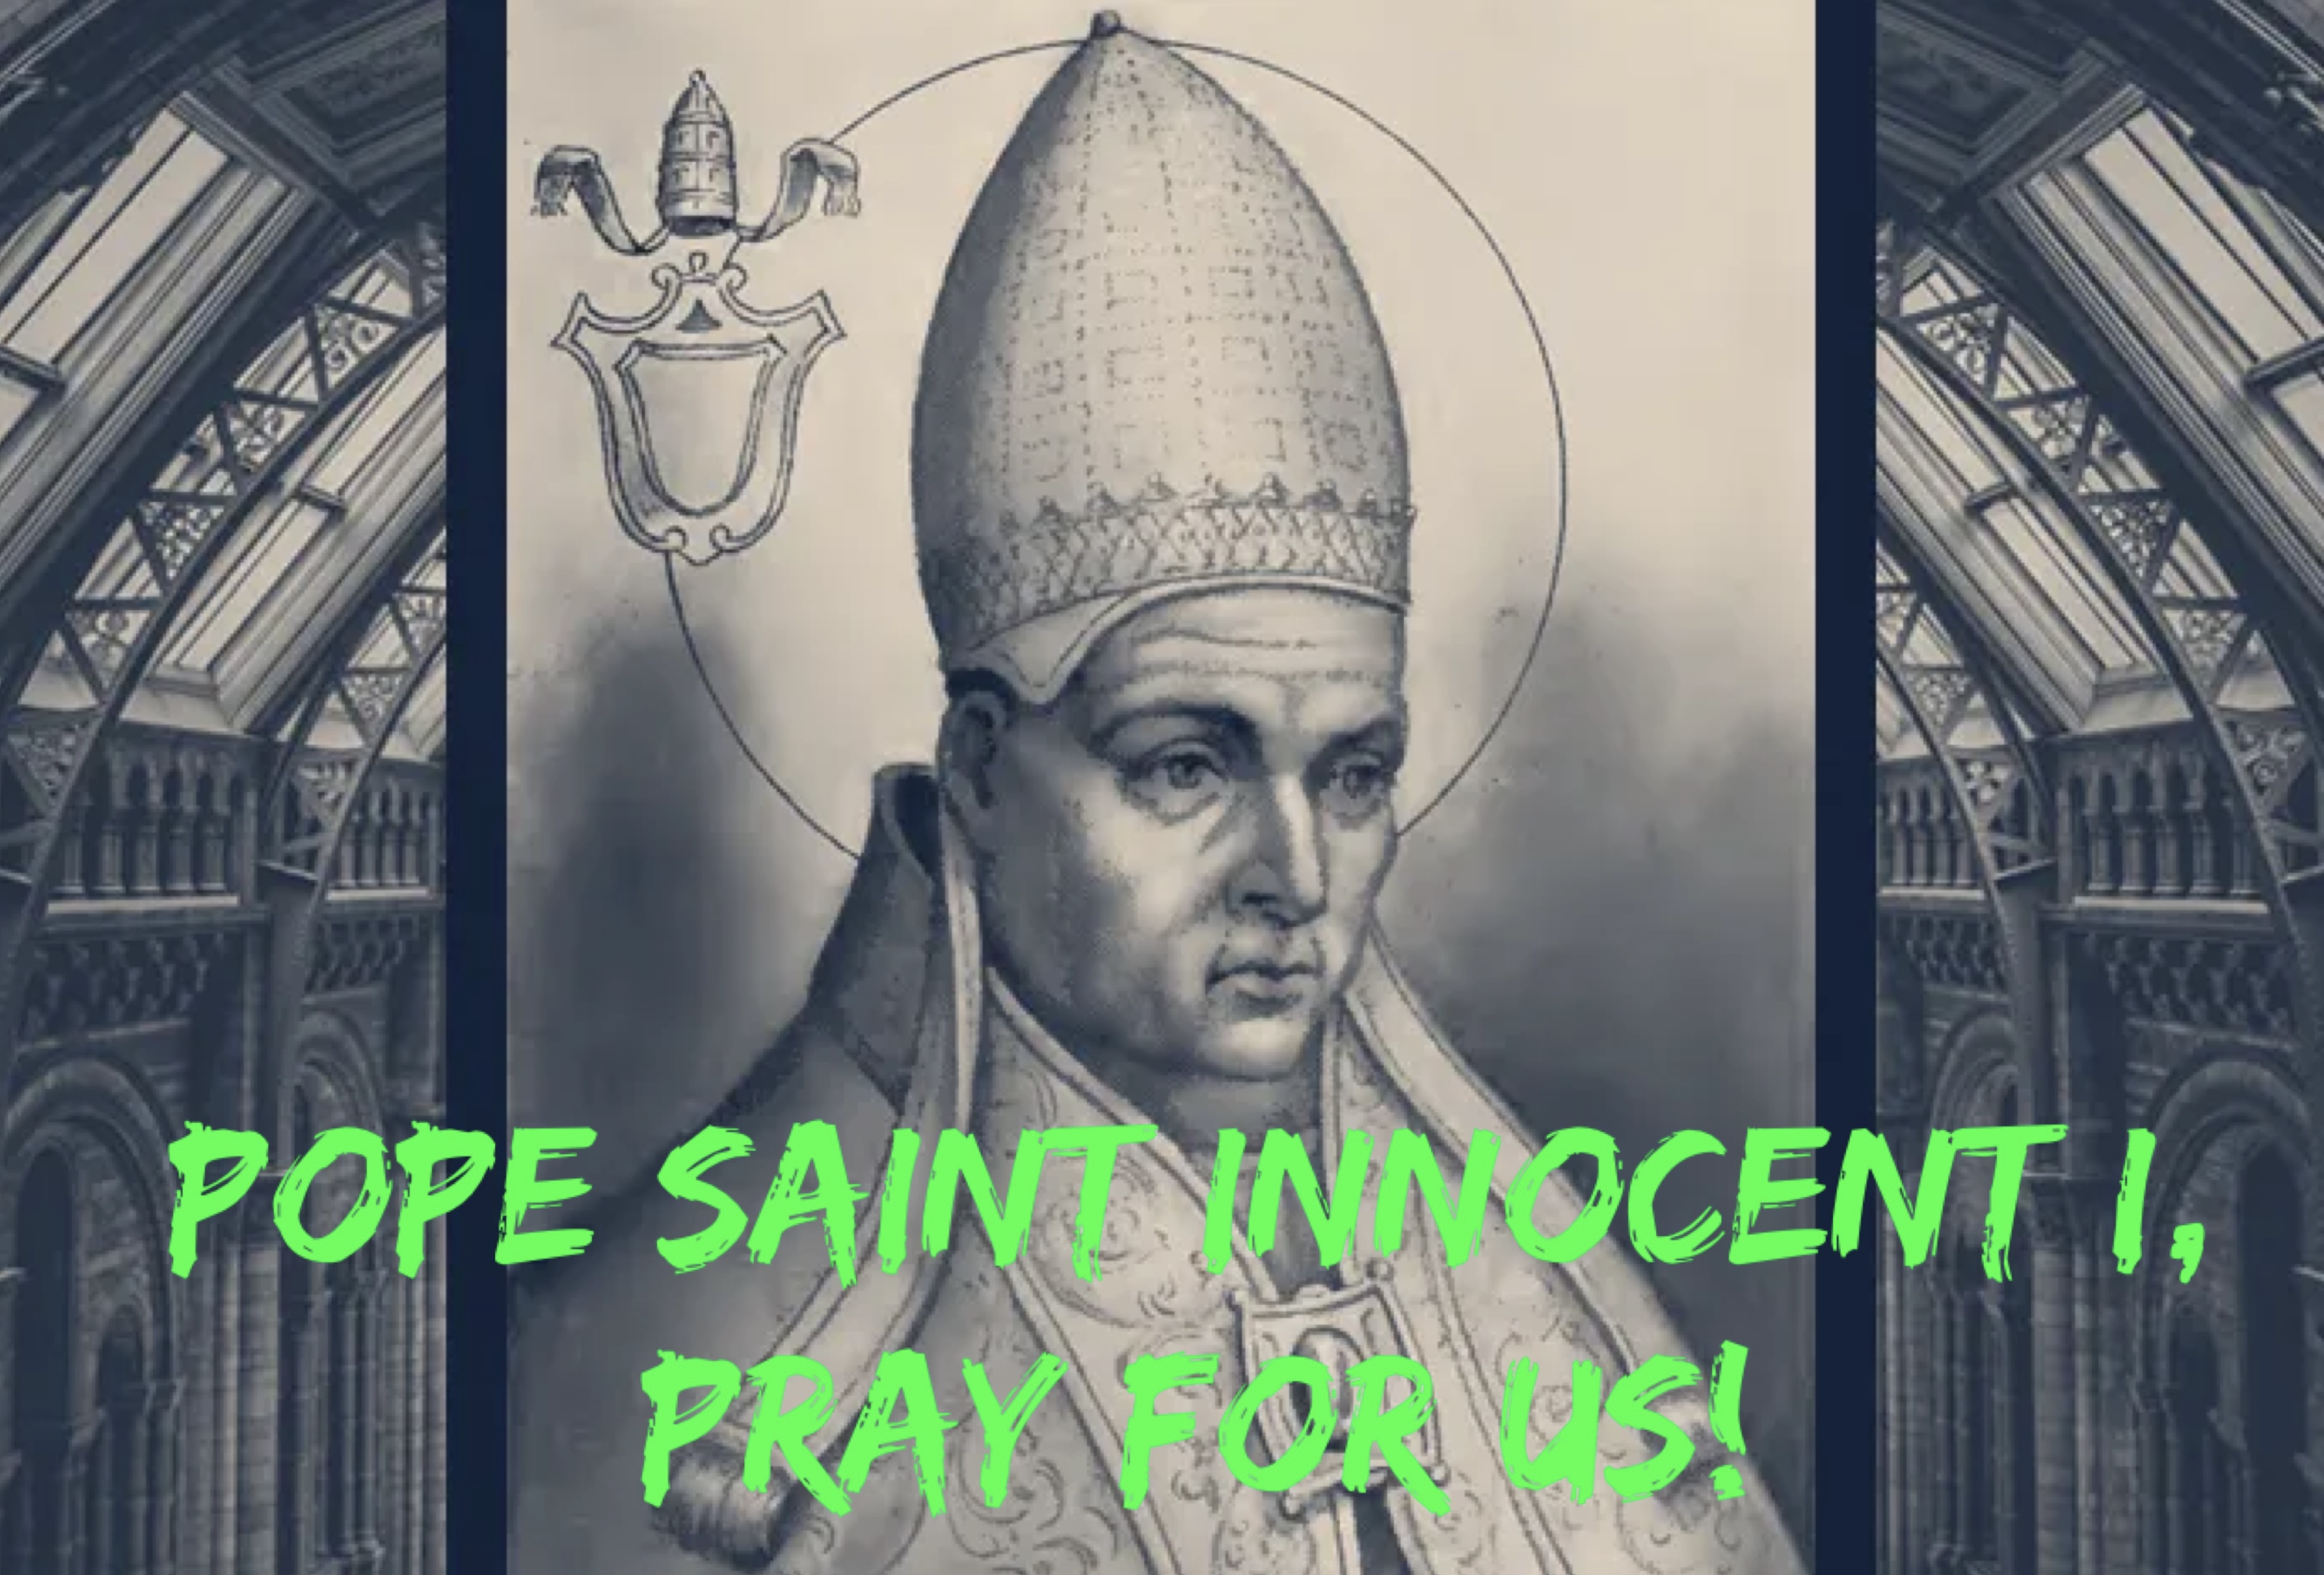 28th July - Pope Saint Innocent I